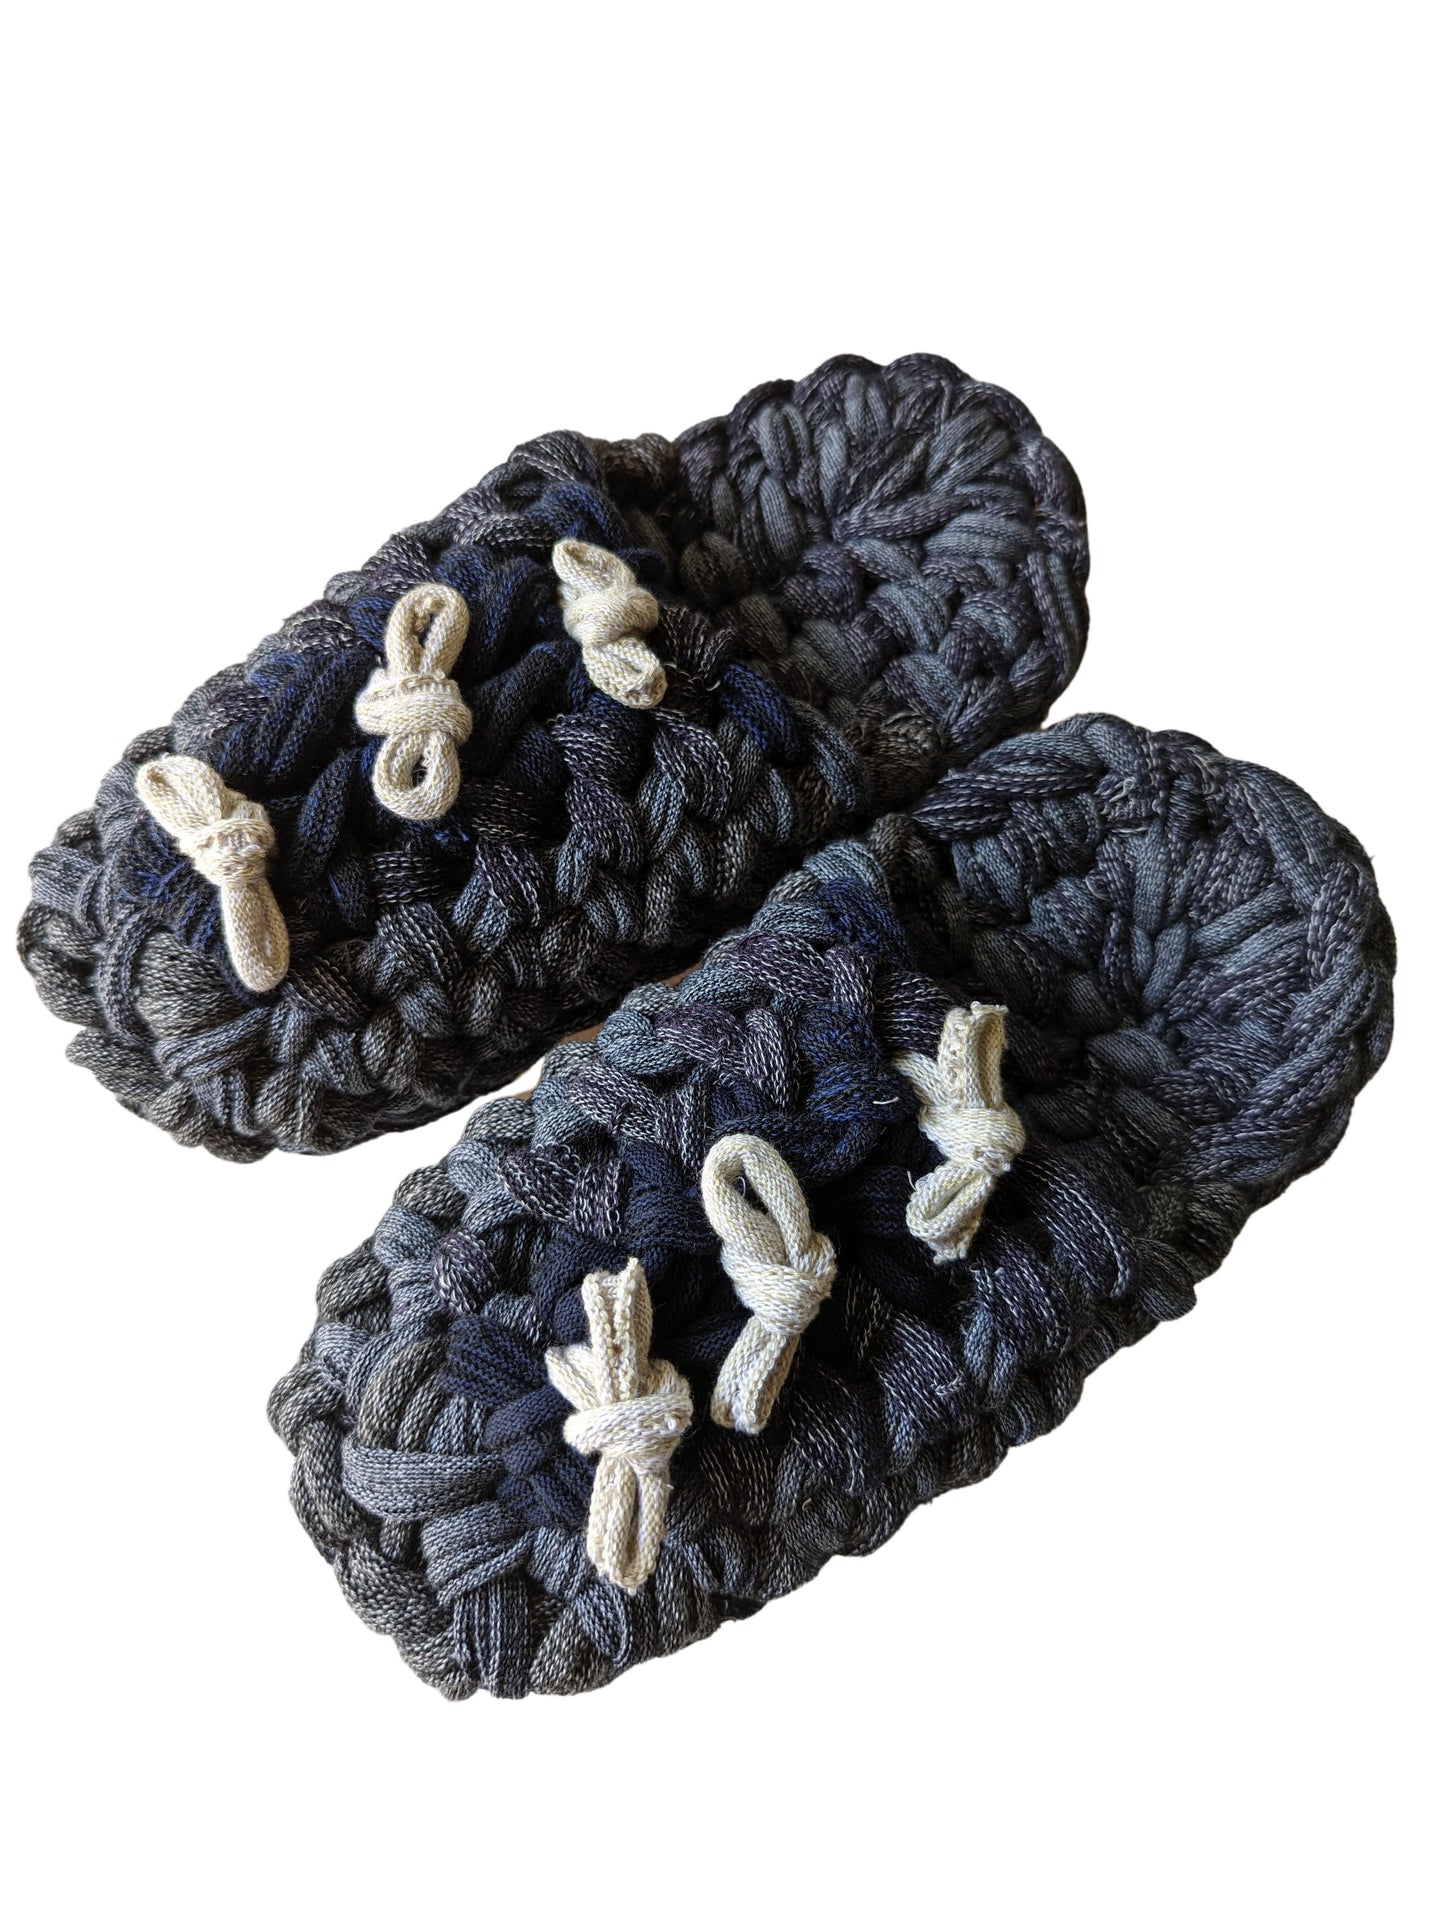 Medium | Knit up-cycle slippers 2023-M10 [Medium]